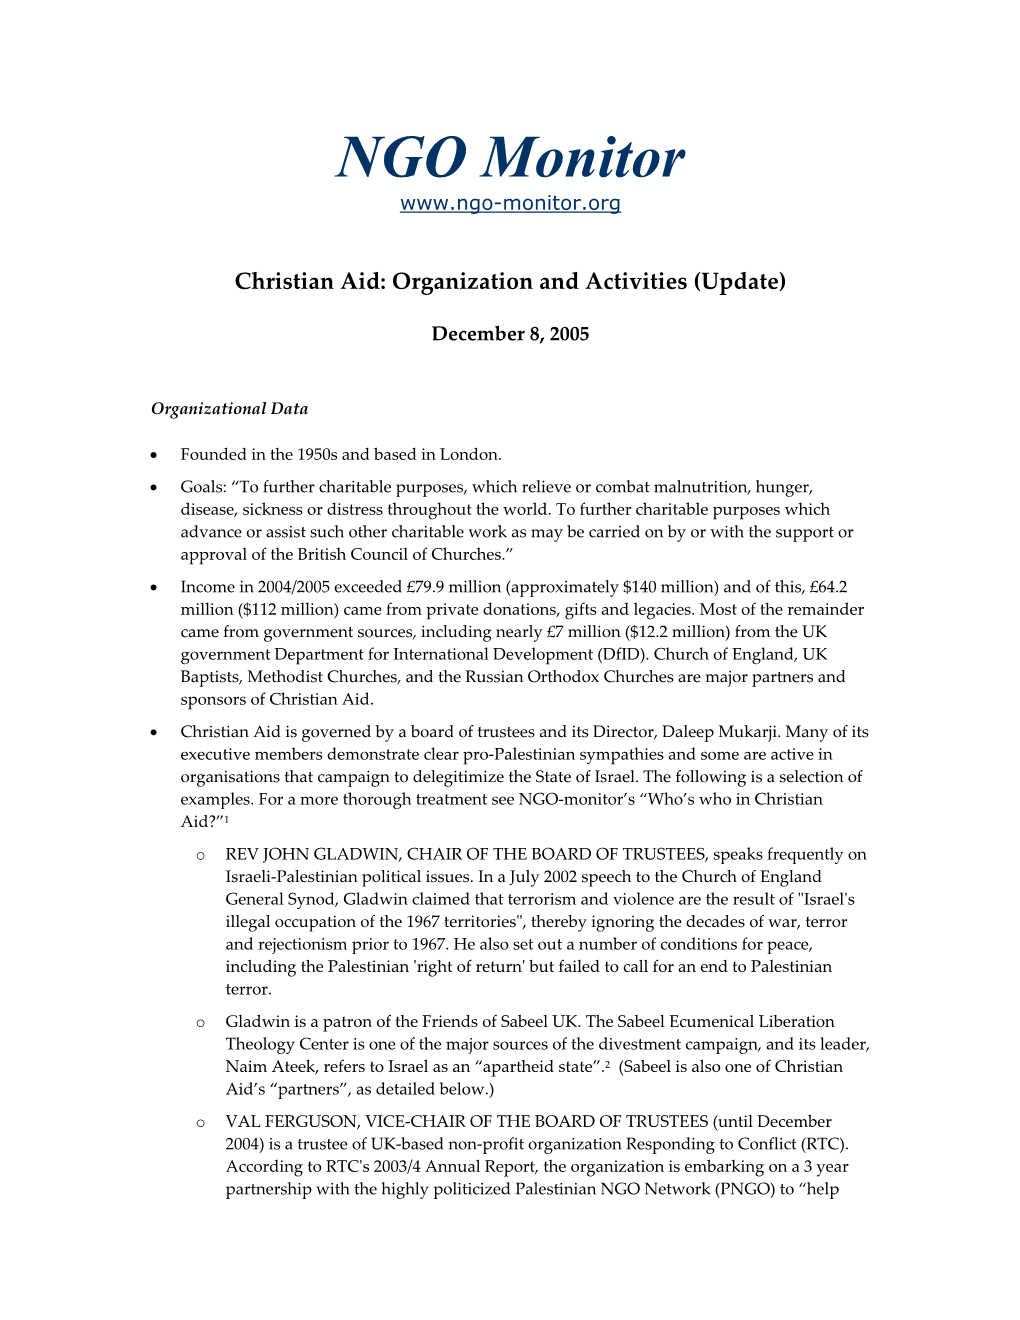 Summary Report on Christian Aid: December 2004